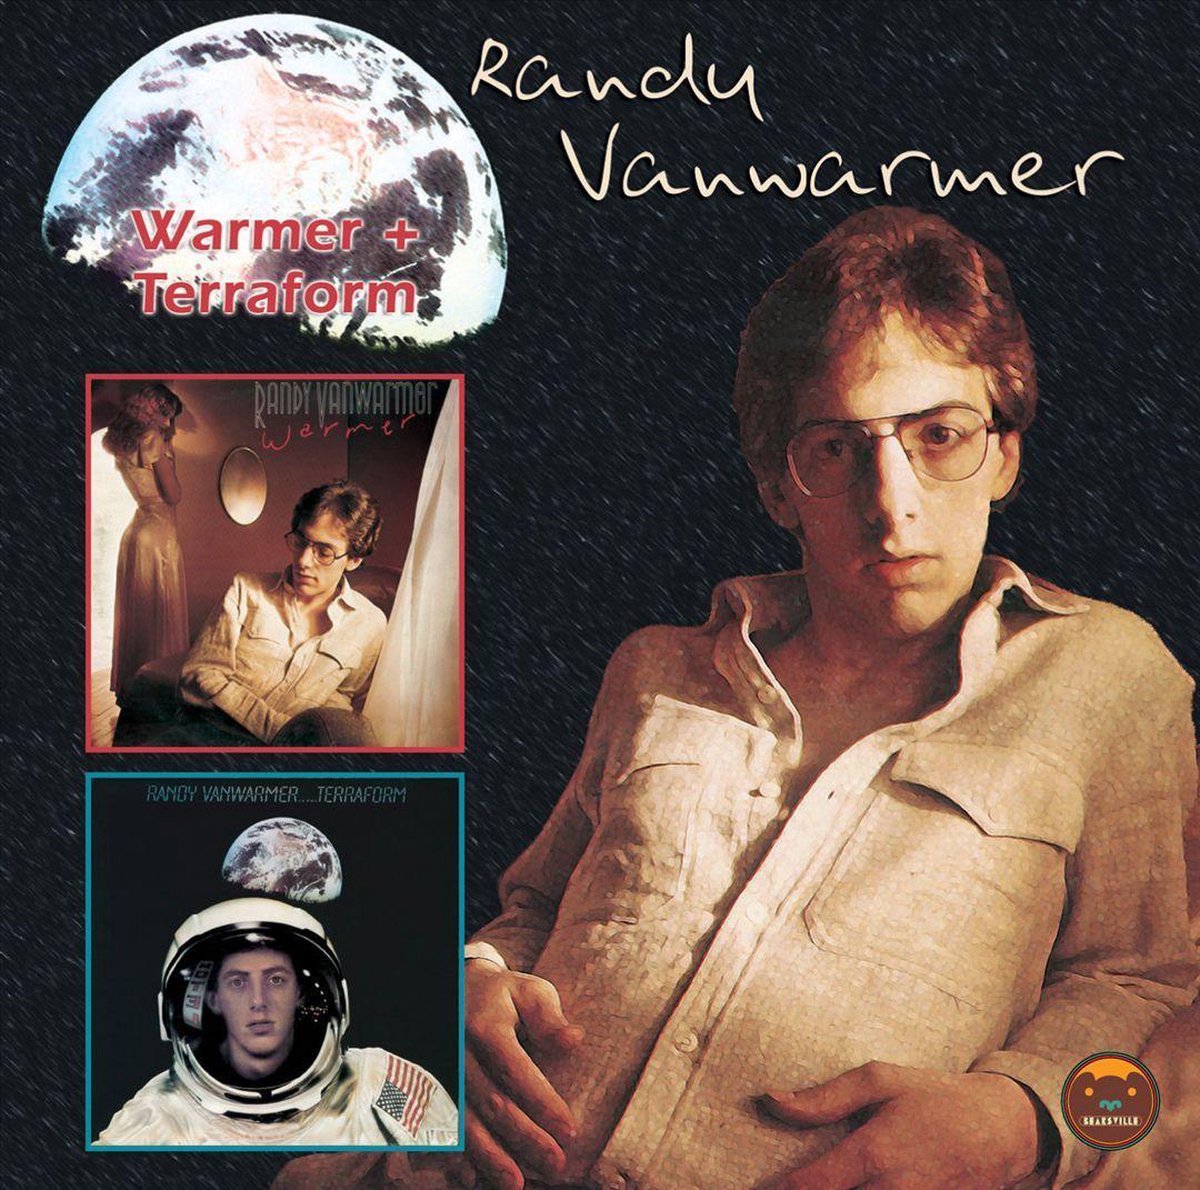 Warmer/Terraform - Randy Vanwarmer